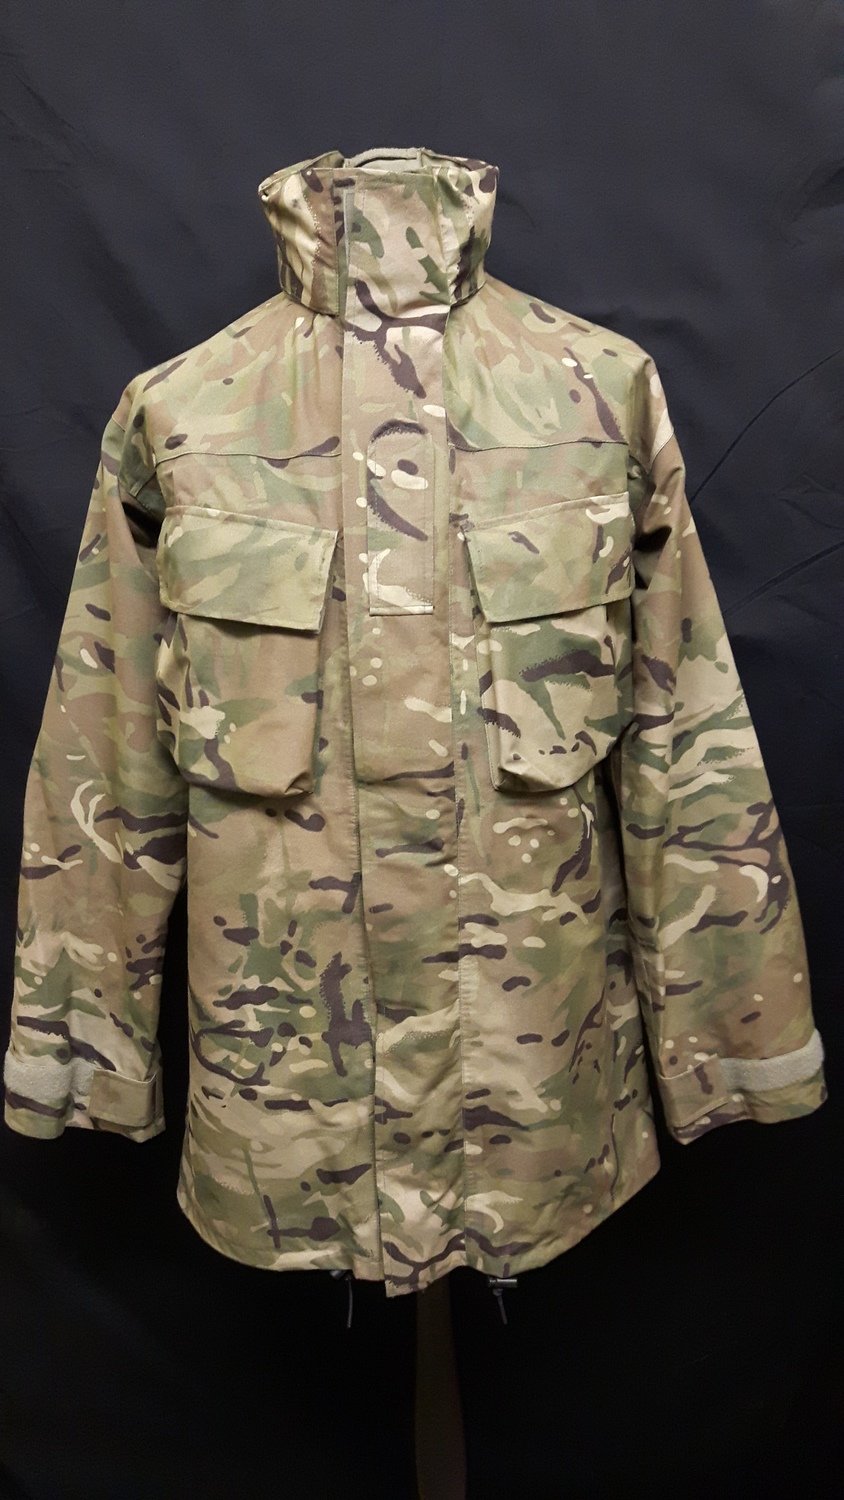 British Army Issue MTP Goretex Jacket, Size: 180/96 tall height/medium chest